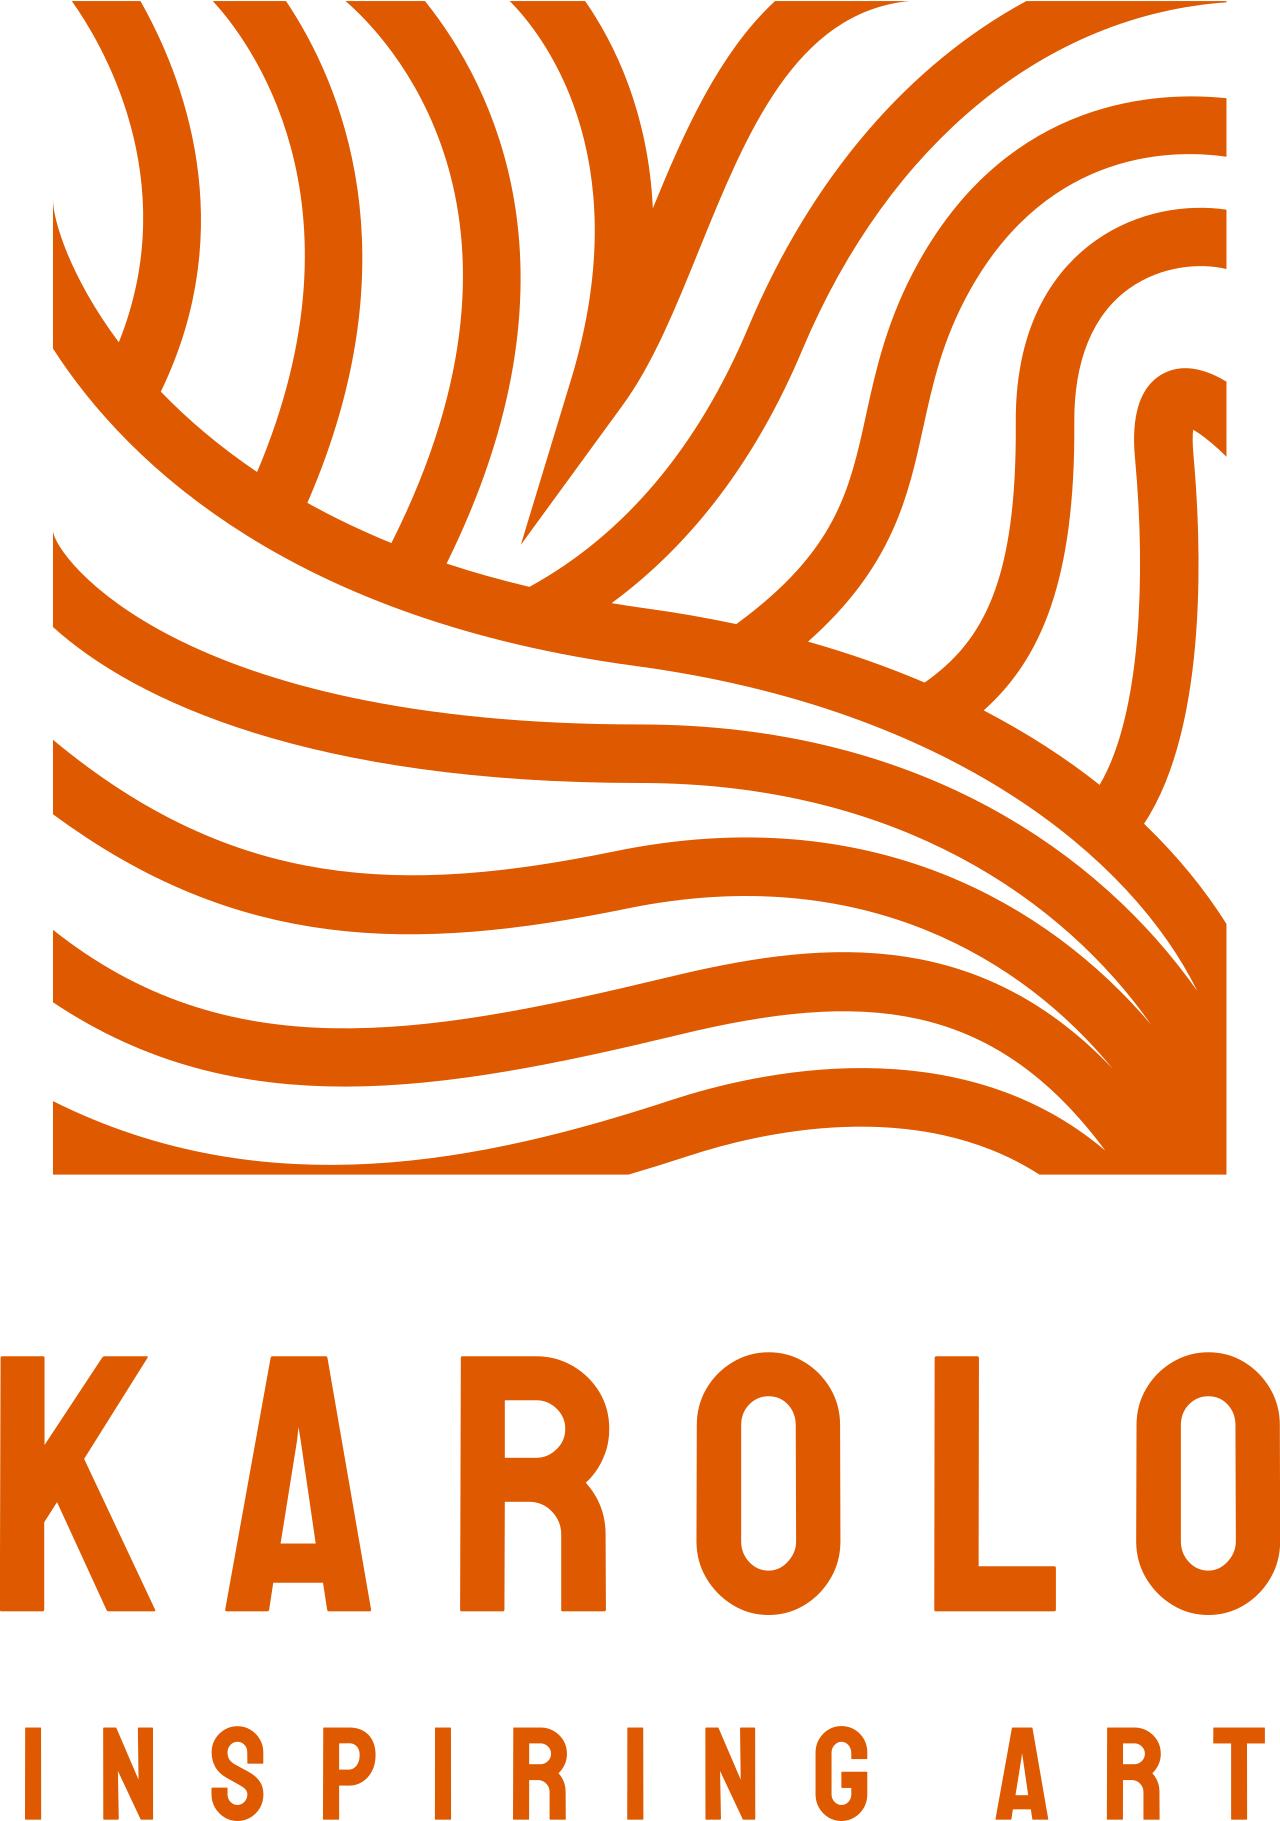 Karolo's logo